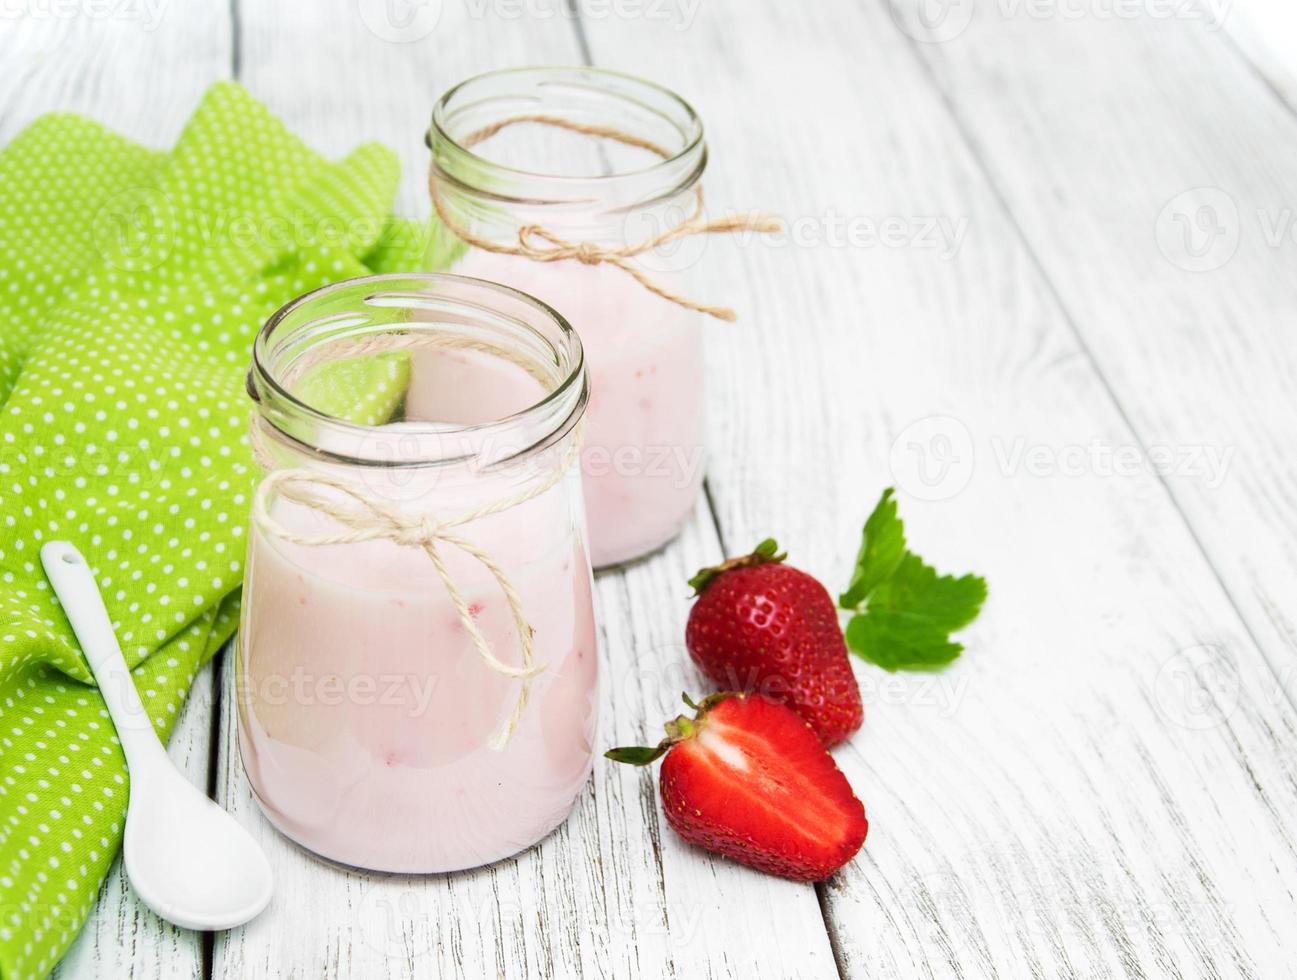 yogurt con fragole fresche foto